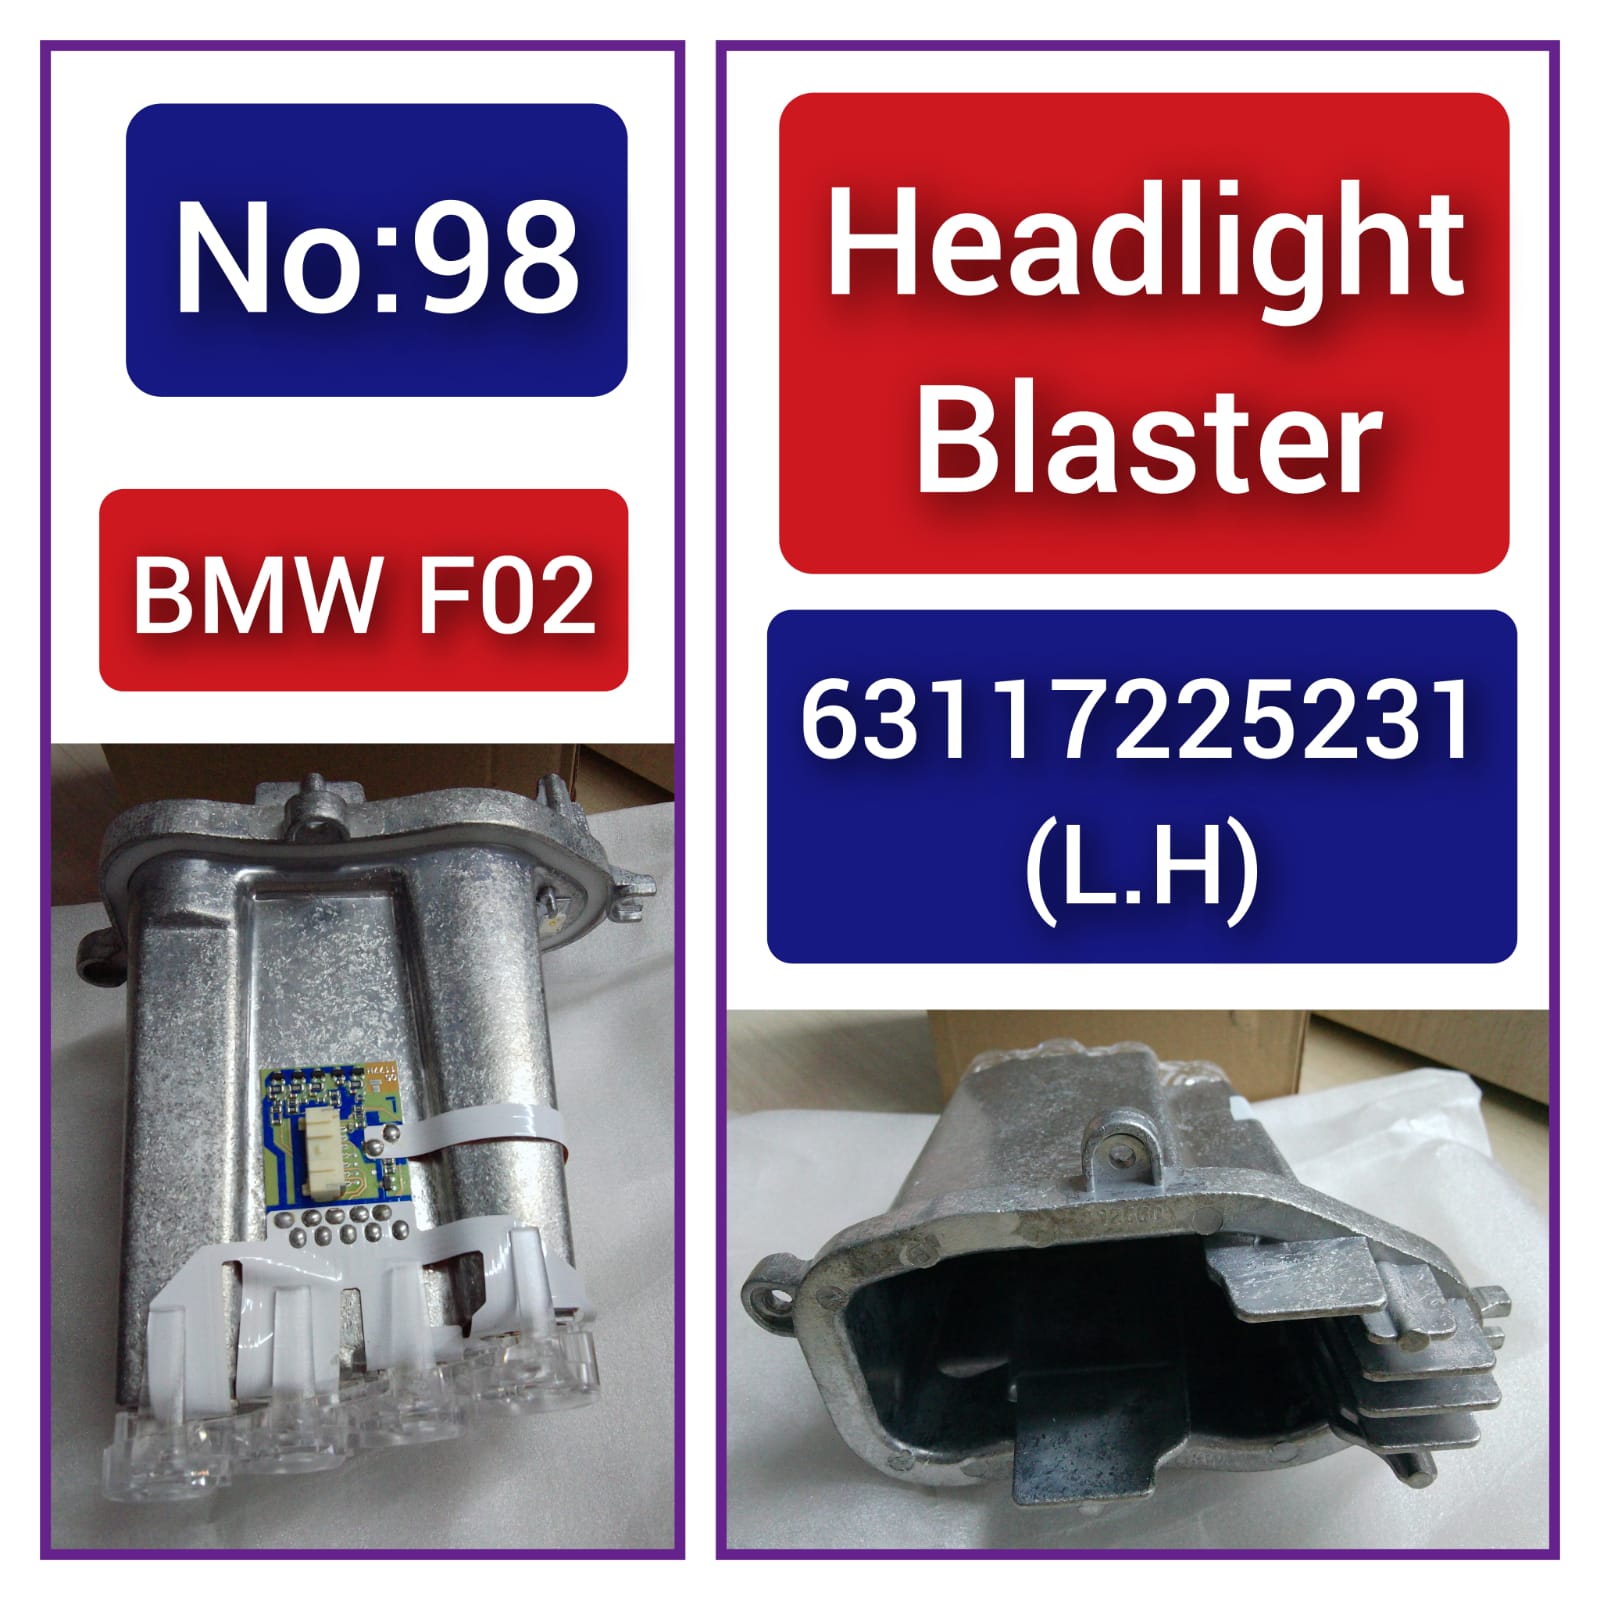 Headlight Left Turn Signal Light Module 63117225231 (L.H) Left For BMW 7 Series F02 Tag-BL-98